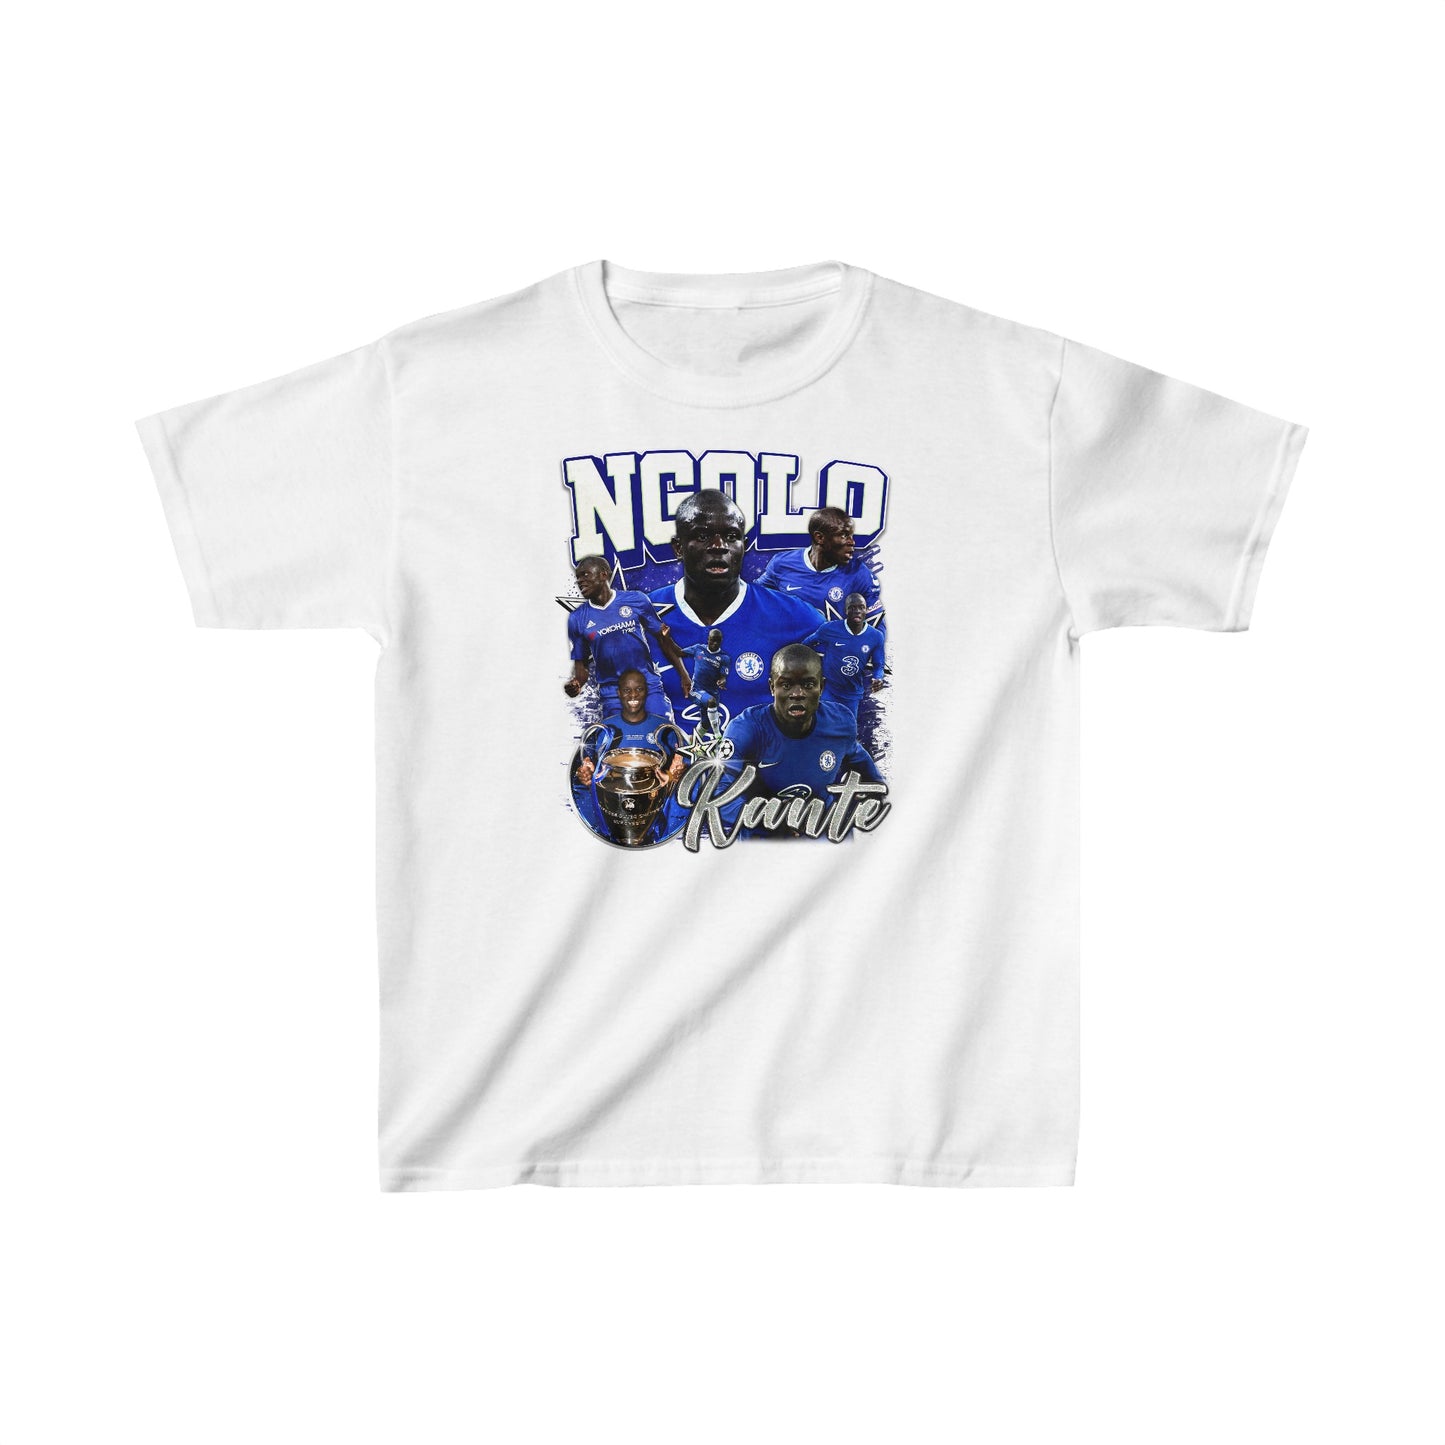 Ngolo Kante Chelsea Graphic T-Shirt